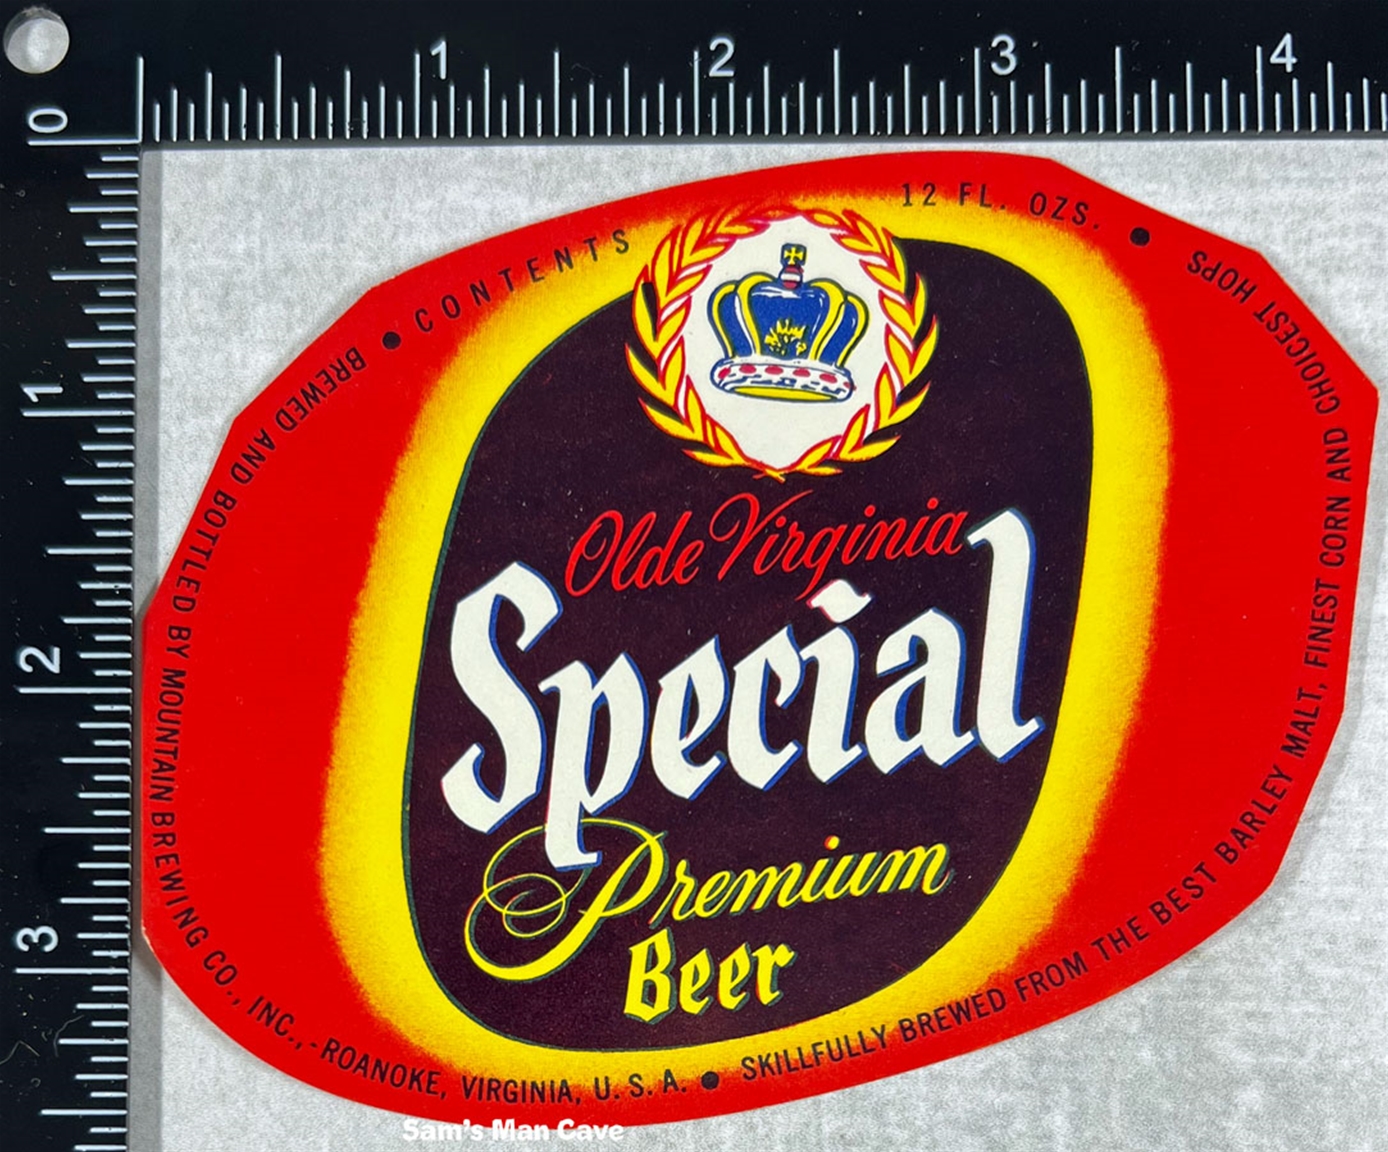 Olde Virginia Special Premium Beer Label